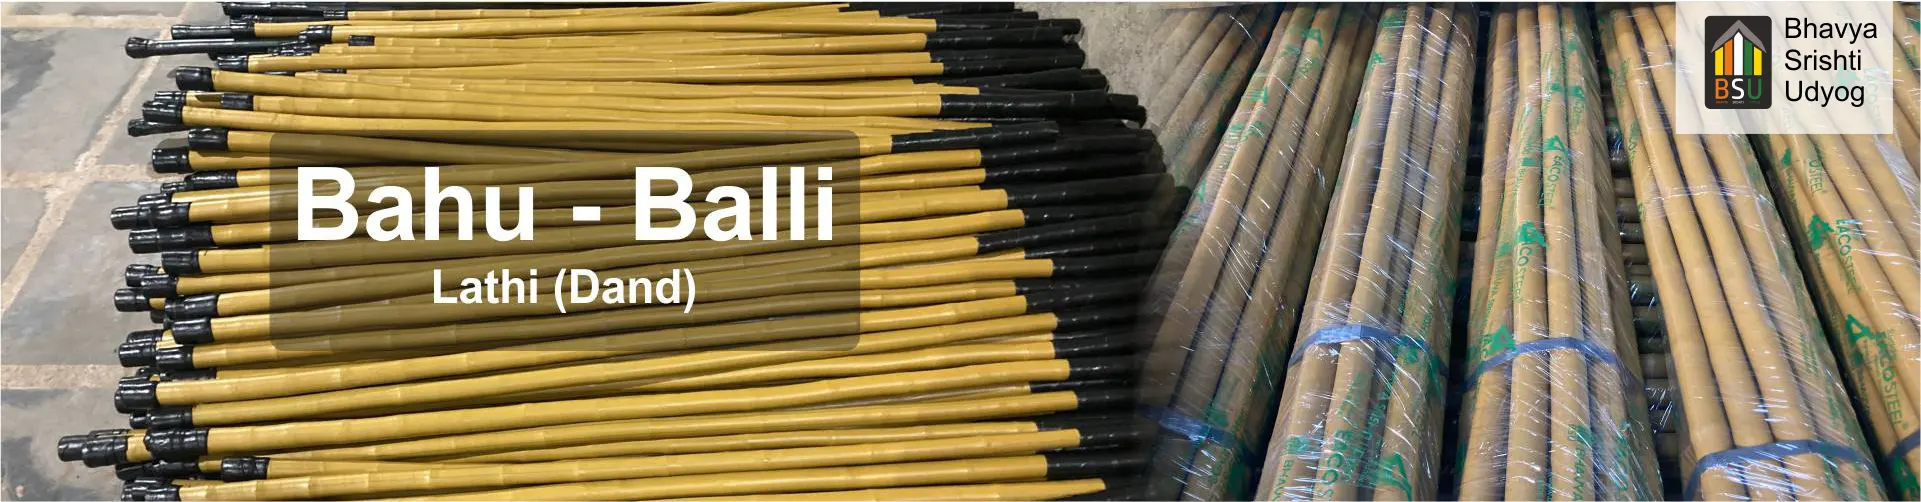 Bahu-Balli Lathi (Dand), Bahu-Balli Fencing Pole/Post, bamboo poles, Bahu-Balli Trellis Supports